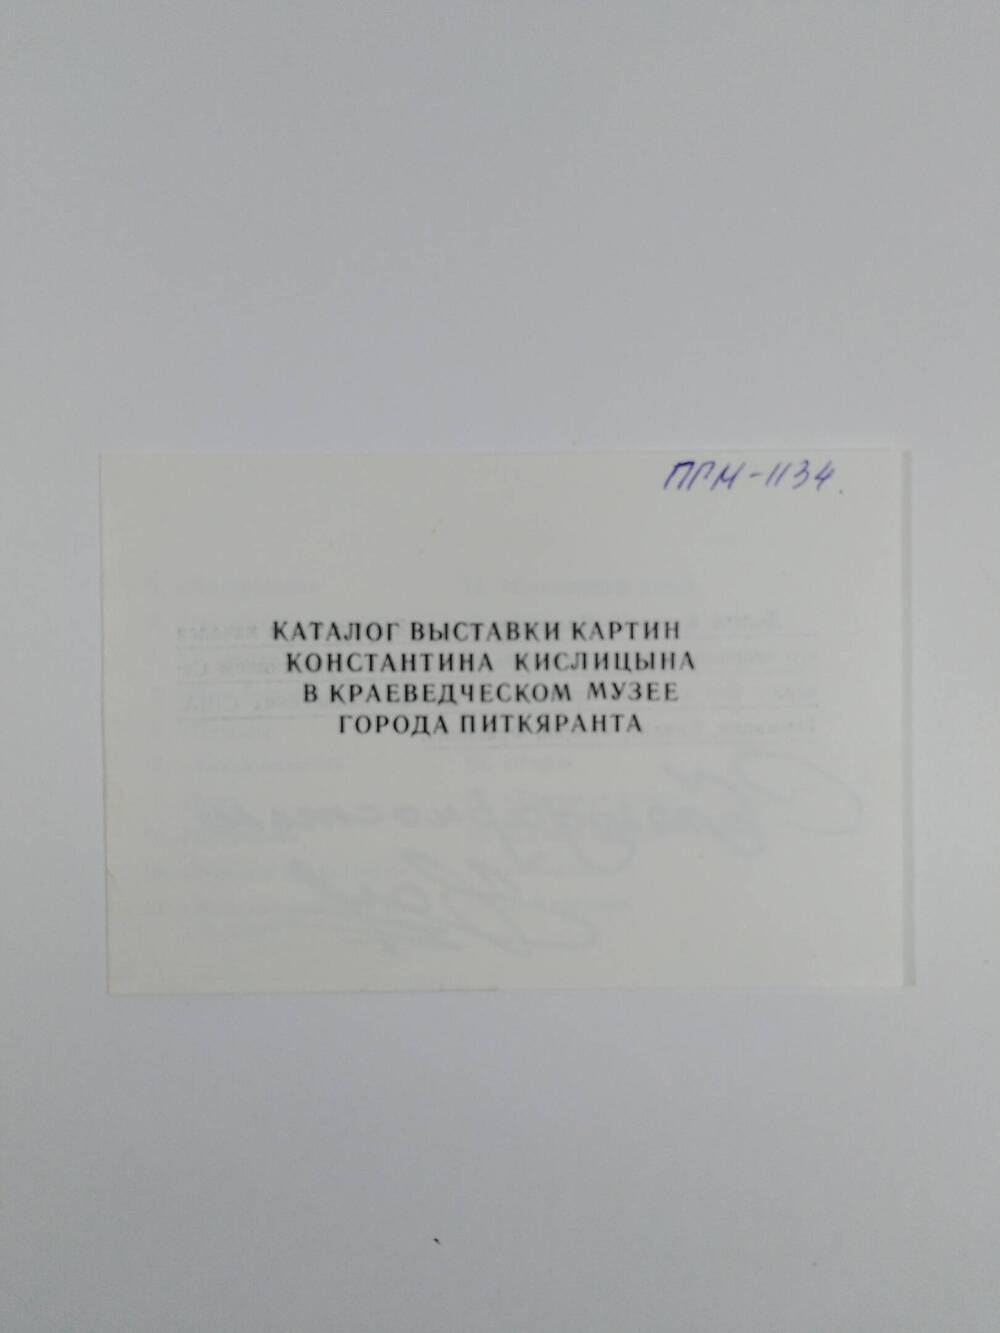 Каталог выставки картин Константина Кислицина в краеведческом музее города Питкяранта (с автографом).